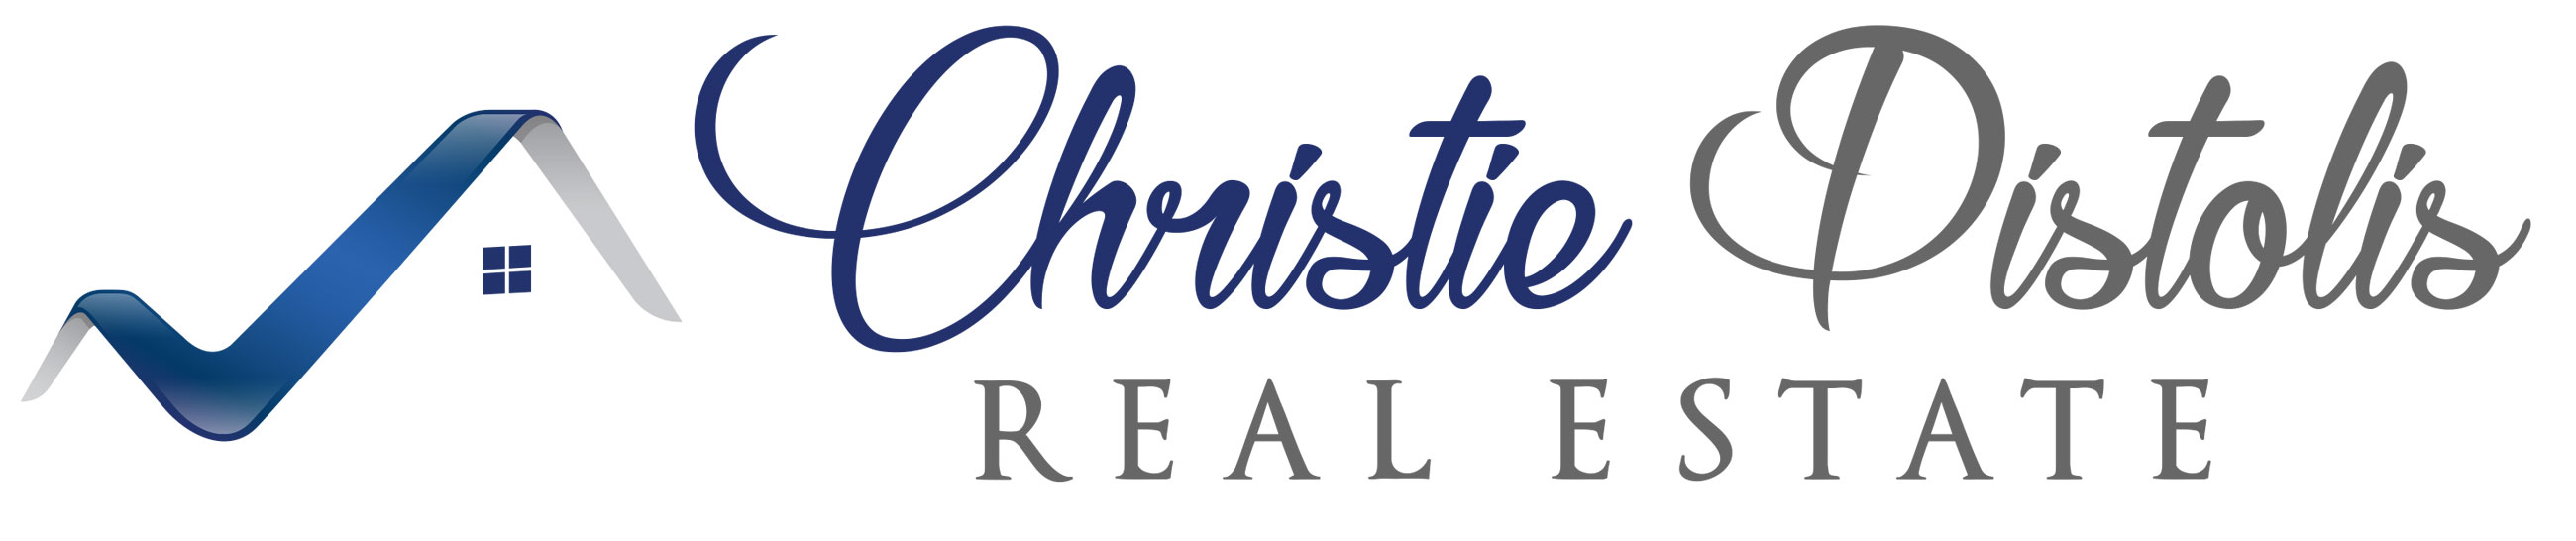 Christie Pistolis. Realtor. Southern Homes of the Carolinas.